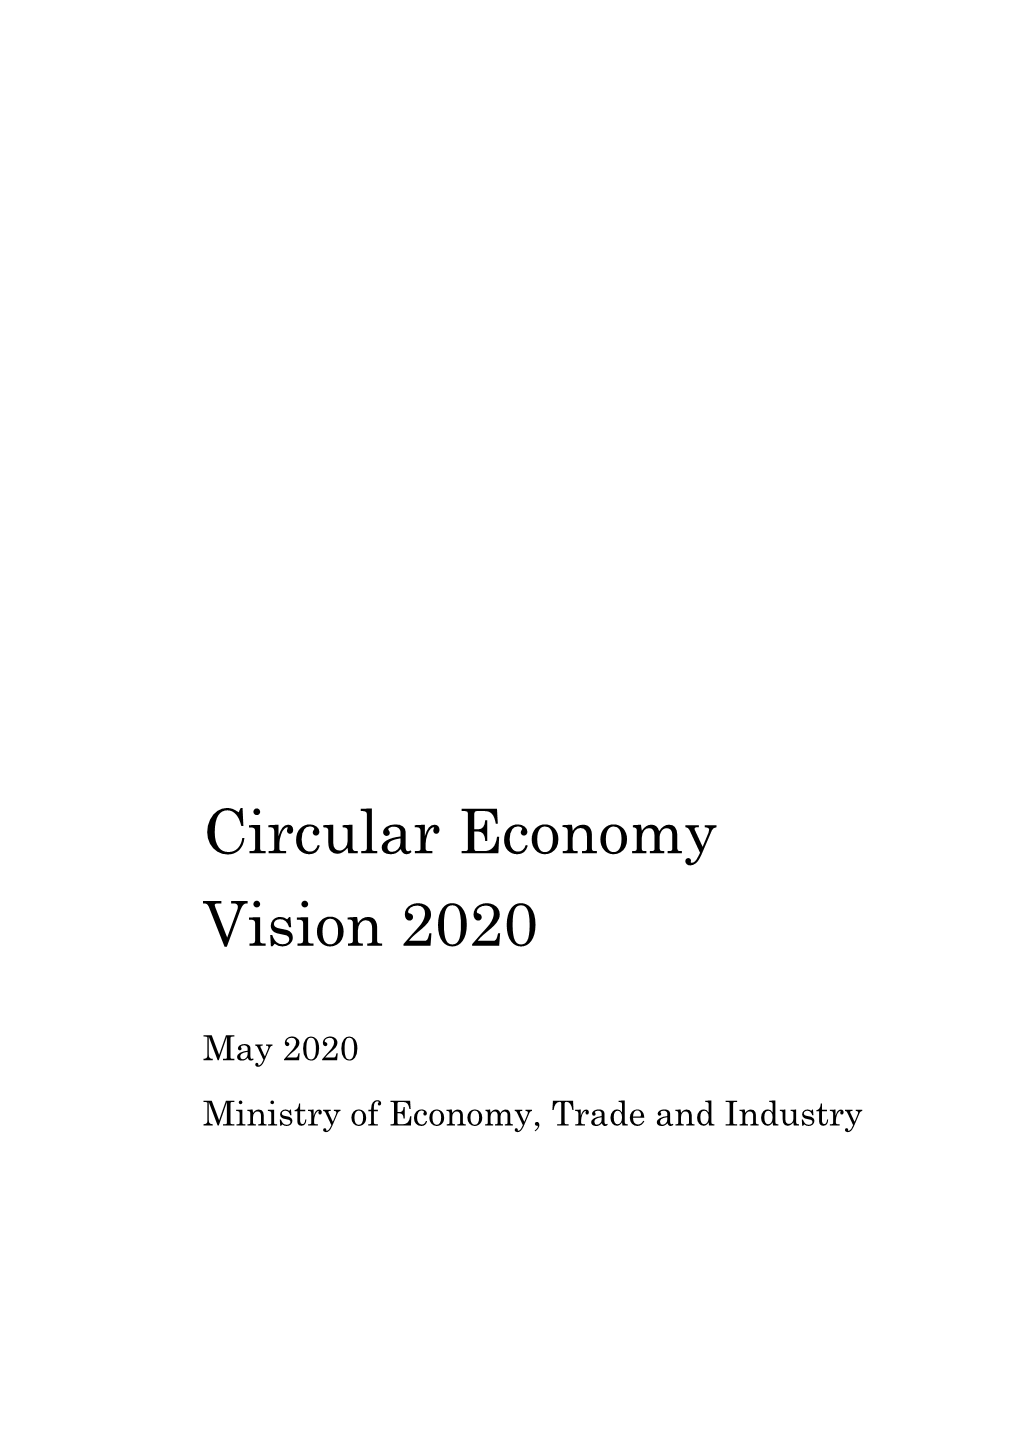 Circular Economy Vision 2020